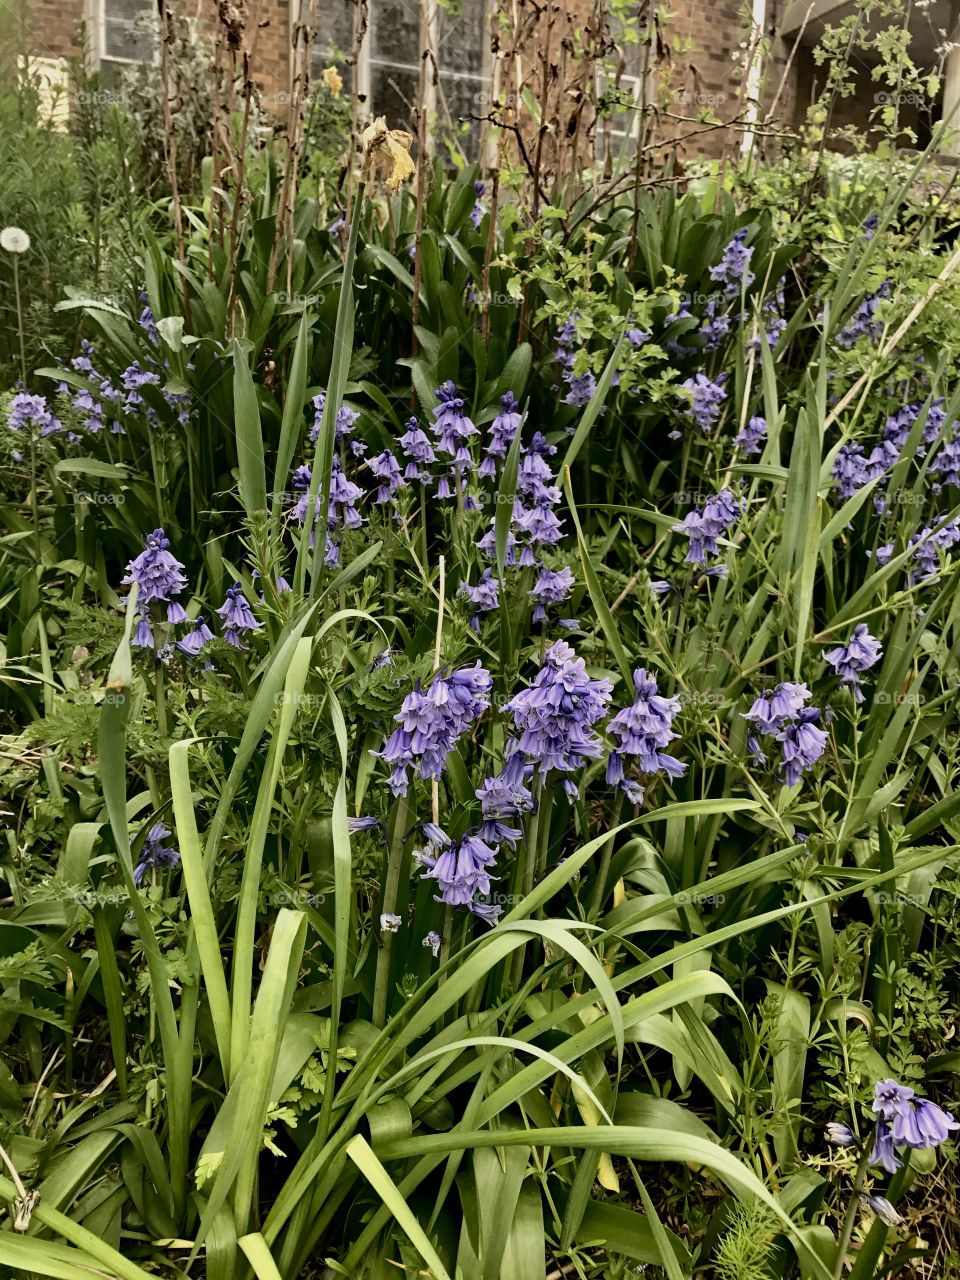 wild blue bells in a grassy bank in wembley near Park Lane methodist church 